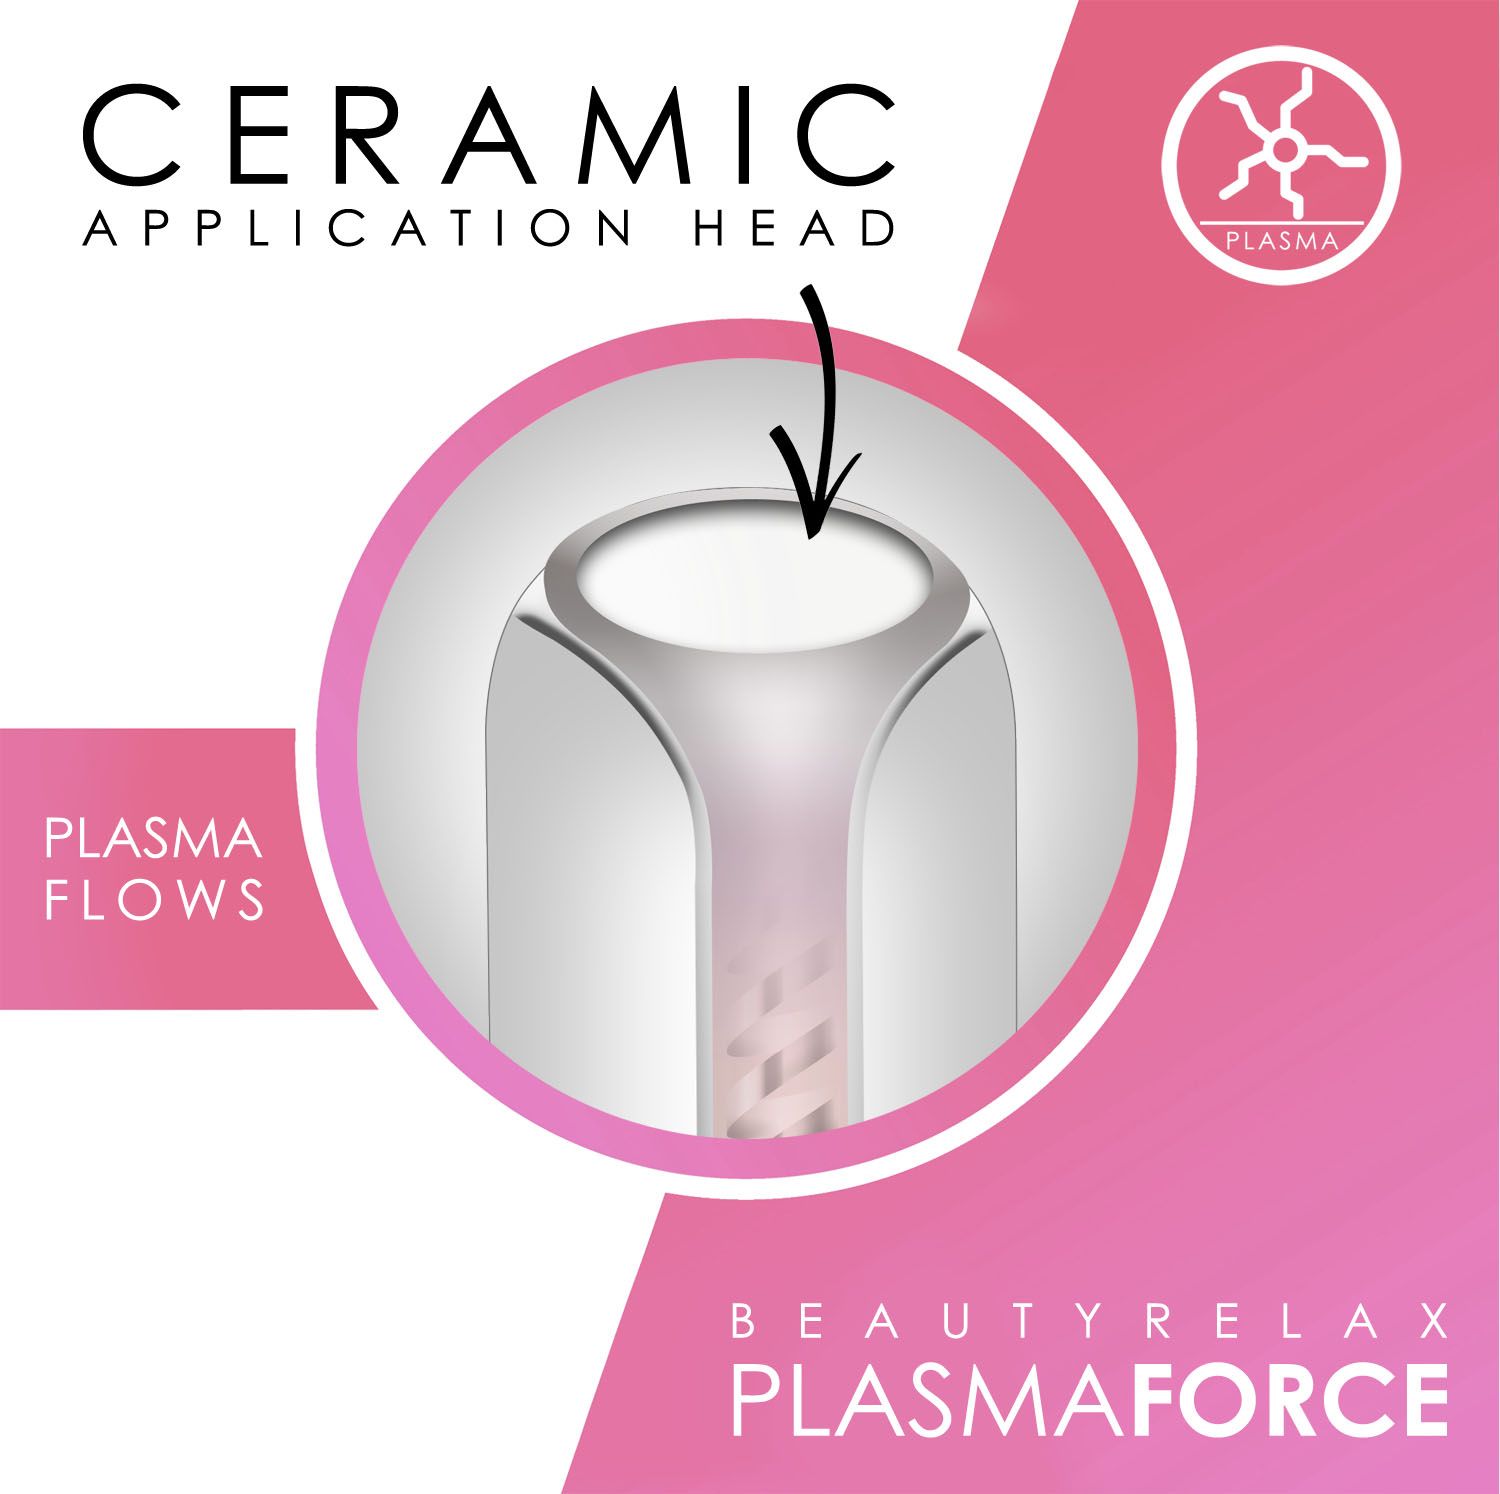 BeautyRelax Plasmaforce